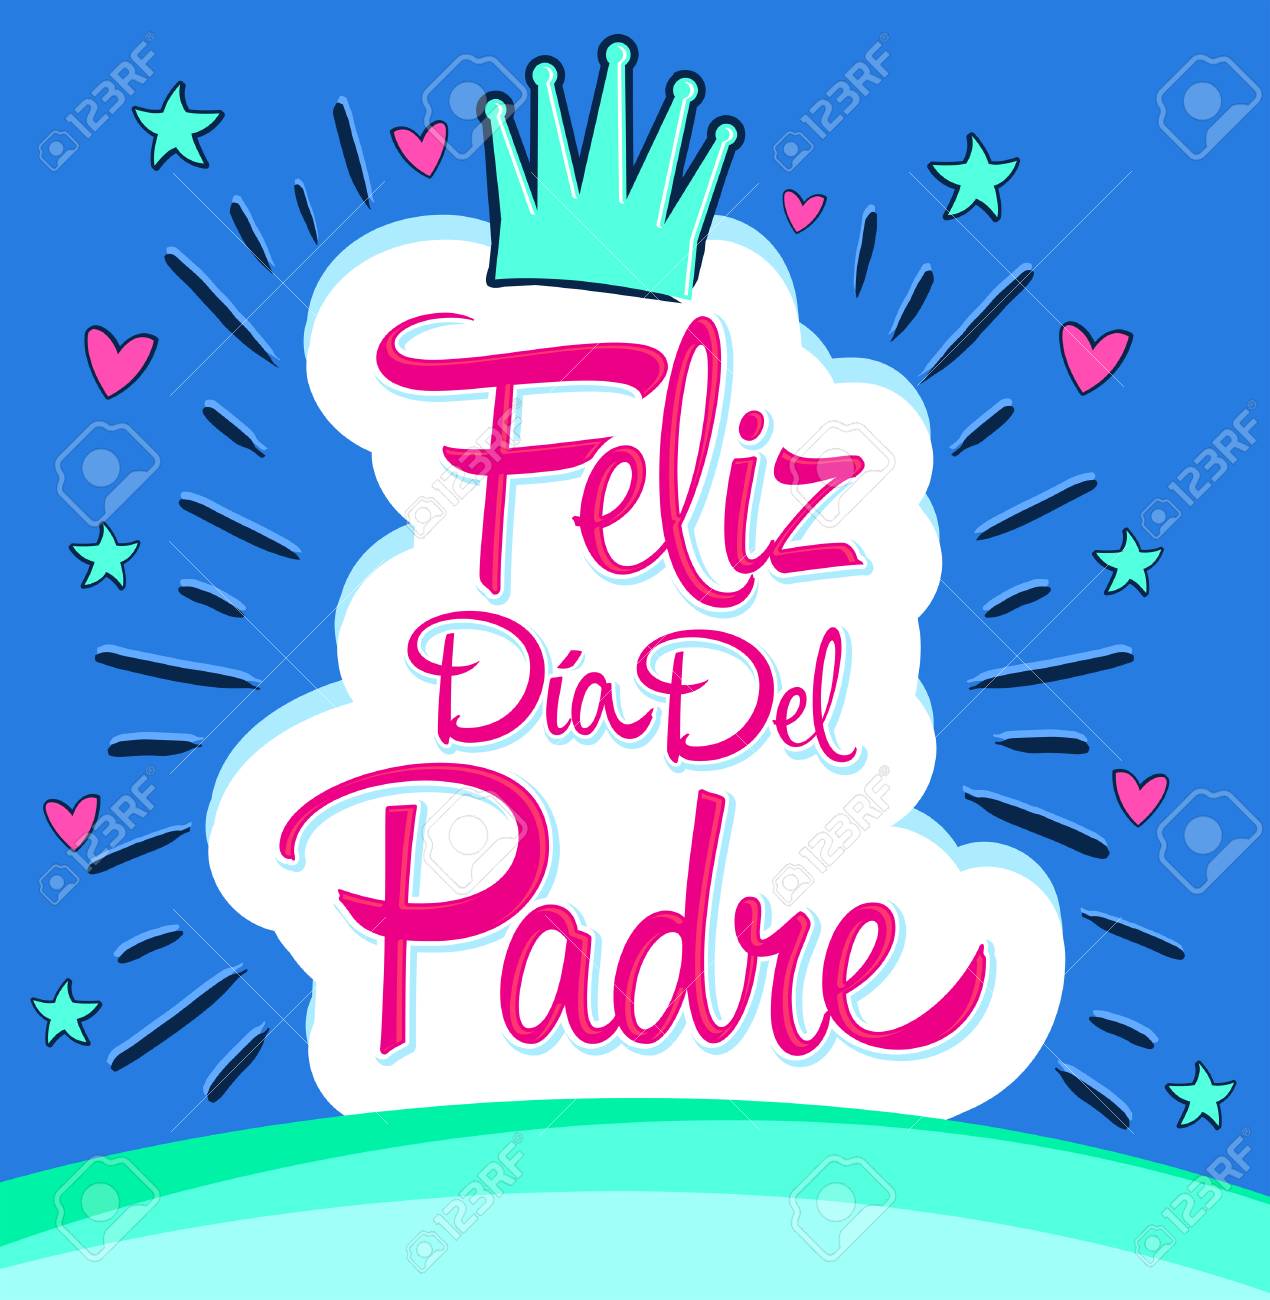 Feliz Dia del Padre, Happy Fathers day spanish text, vector...